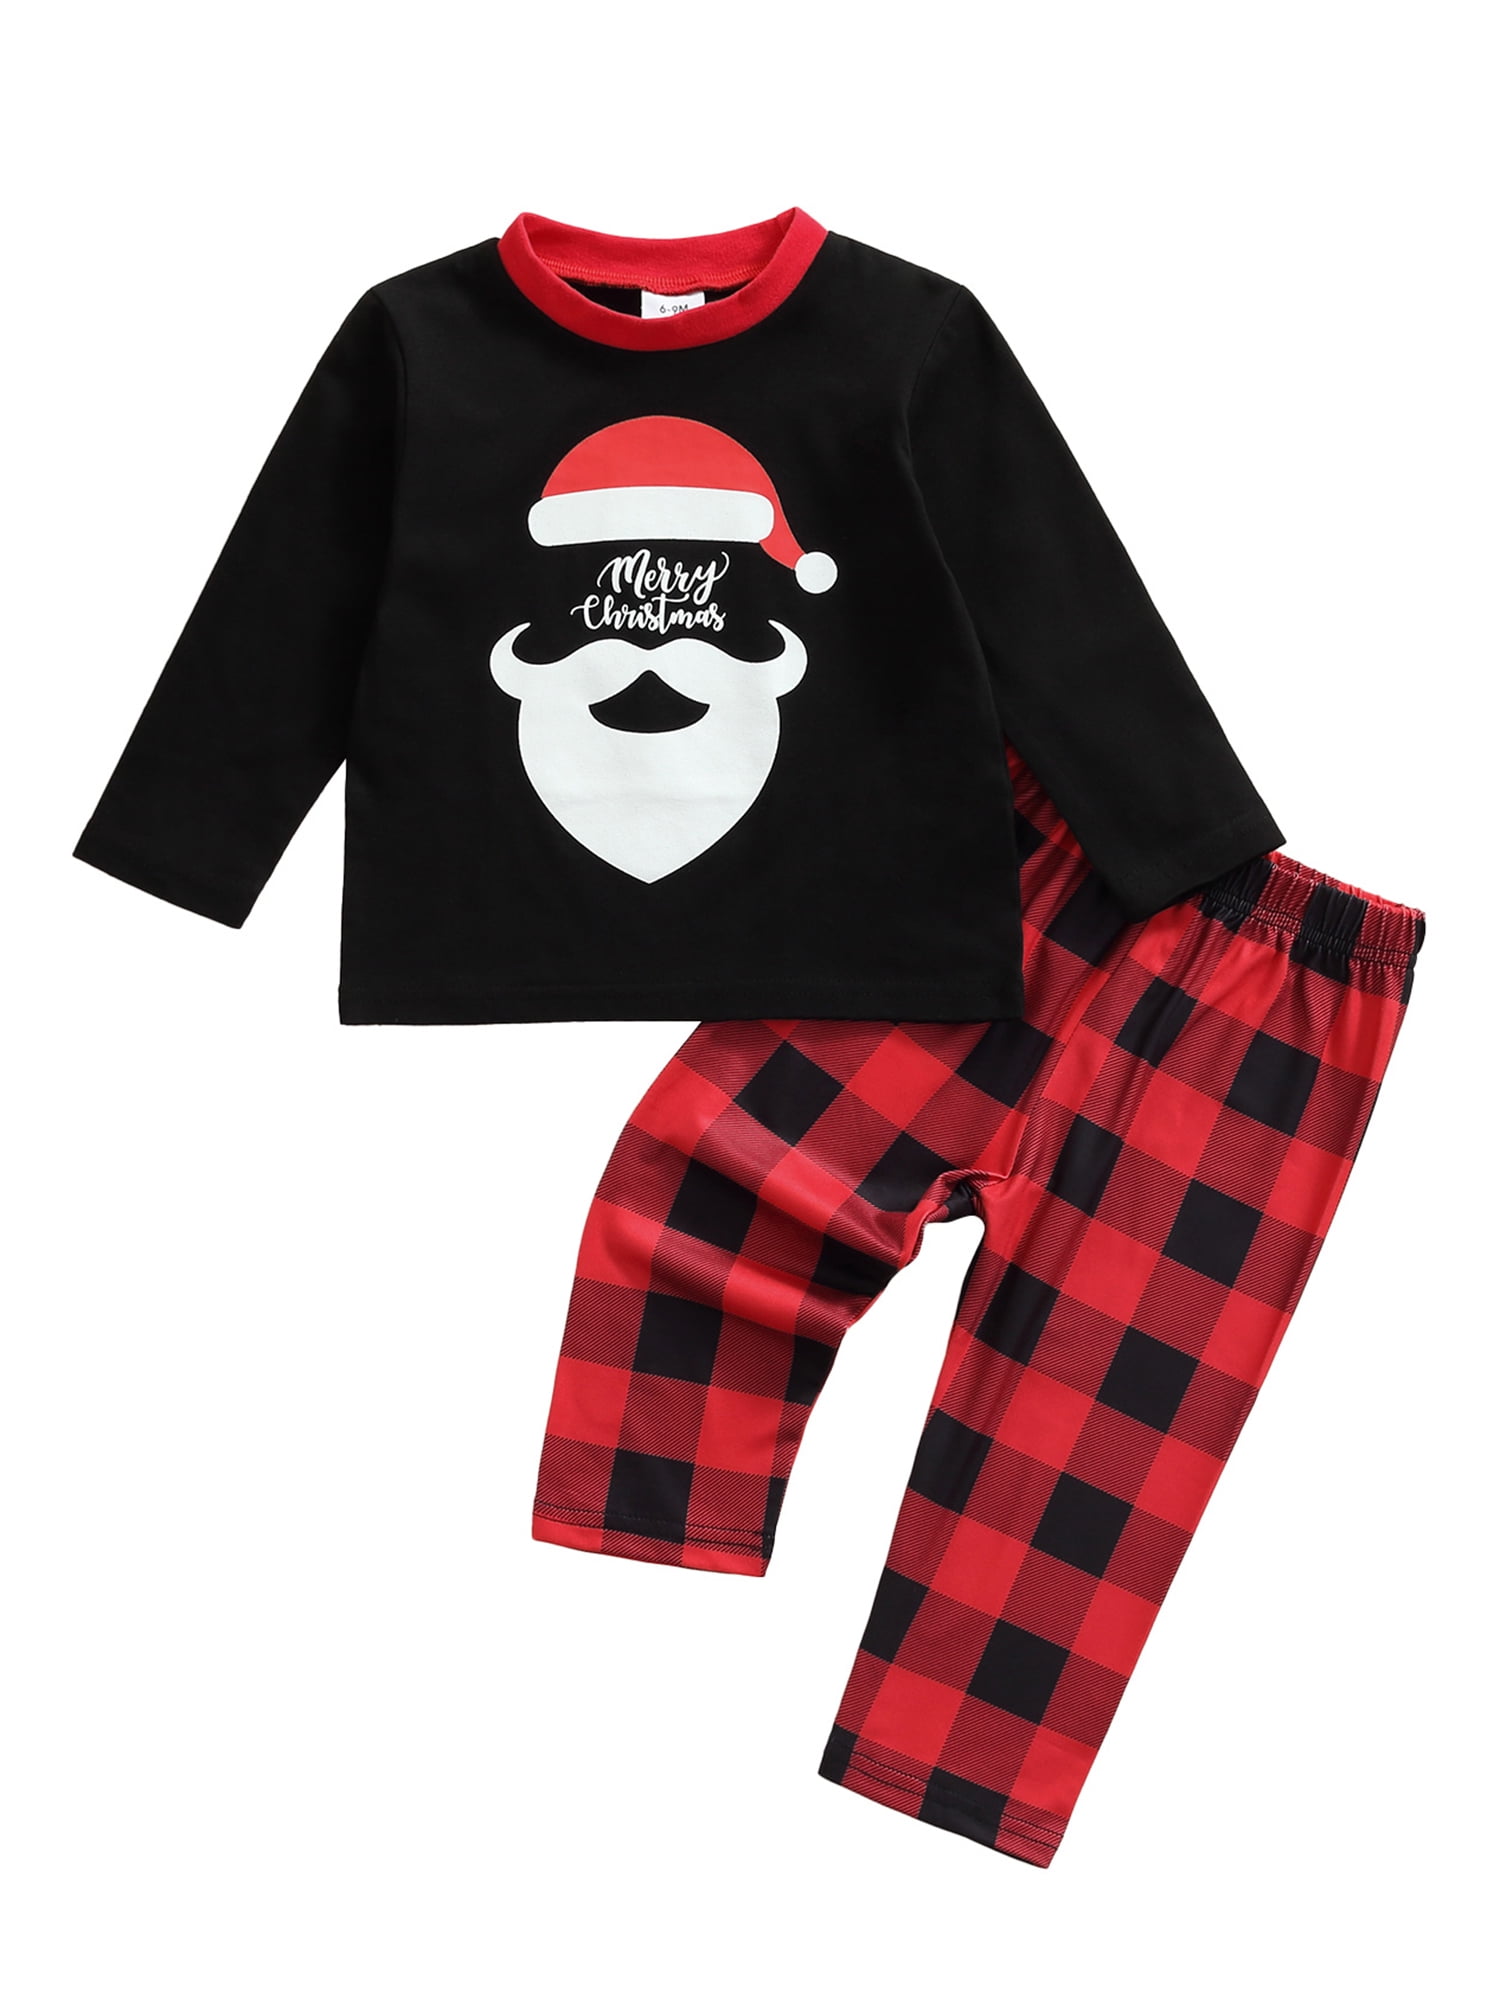 Societee Christmas Oh What Fun Girls Boys Toddler Long Sleeve T-Shirt 